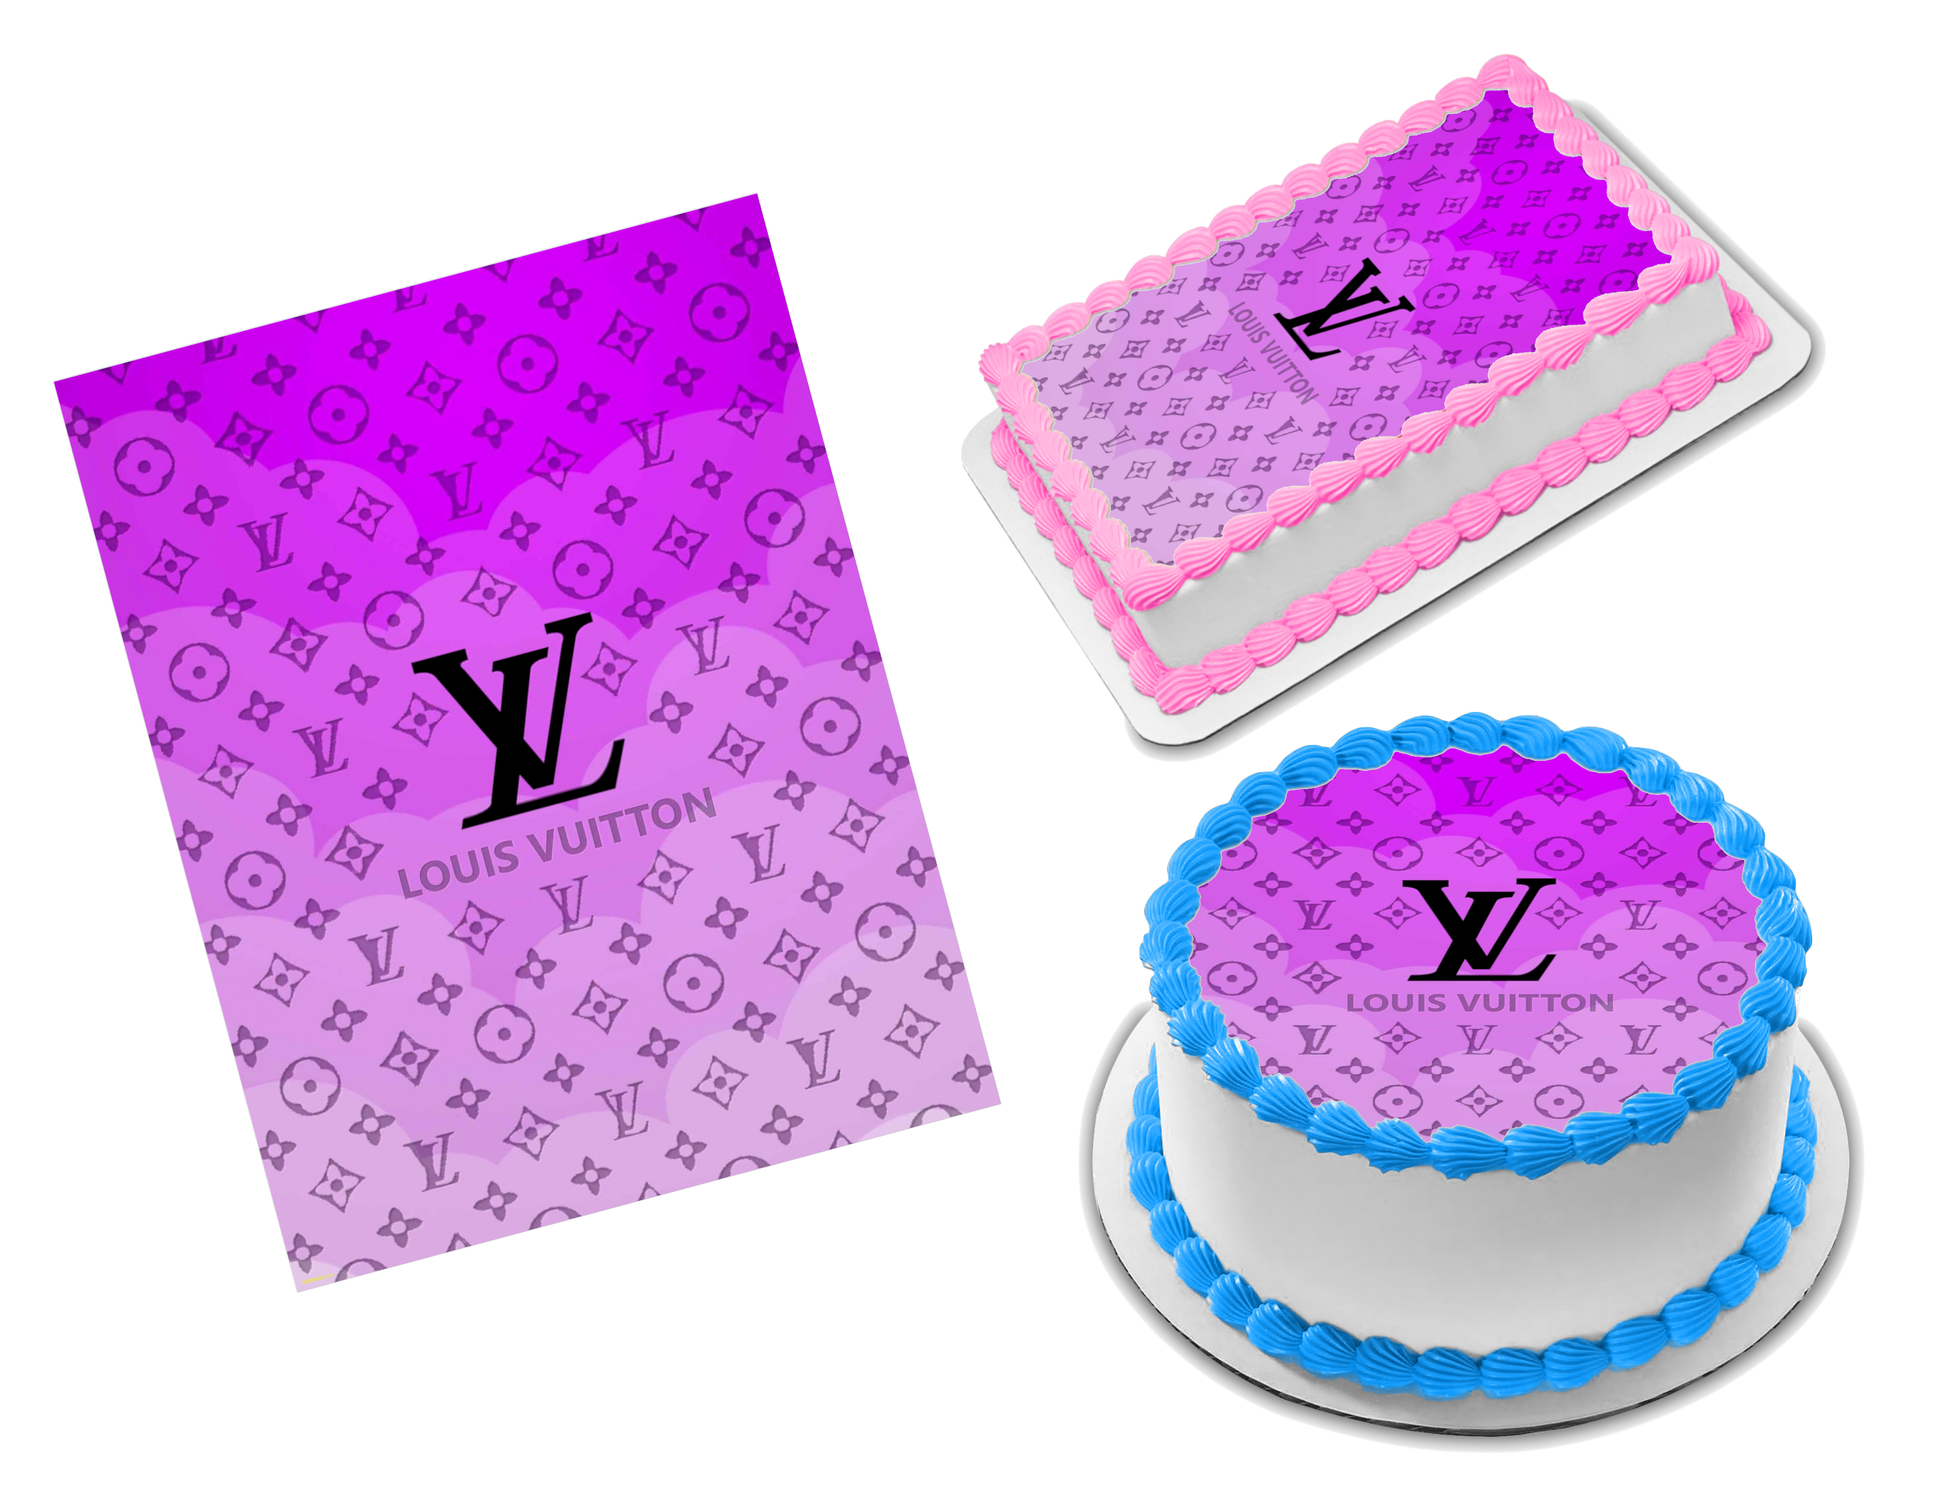 Louis Vuitton Print Edible Image for Cake or Cupcakes, Louis